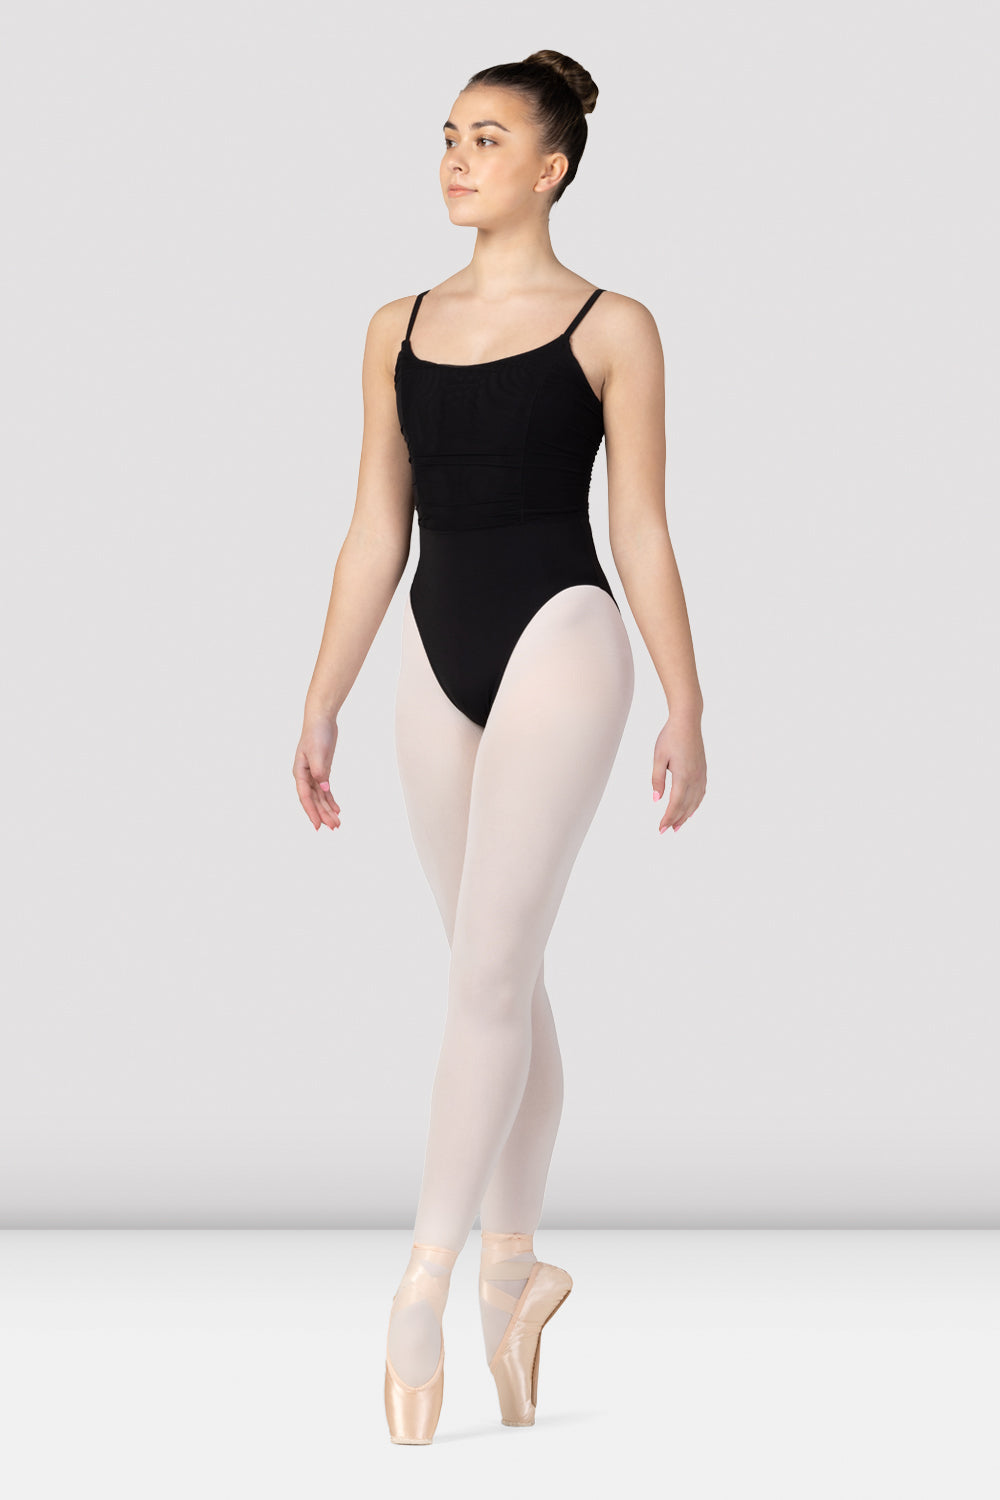 Bloch, Mirella L1007 - Velvet Camisole - The Dance Store